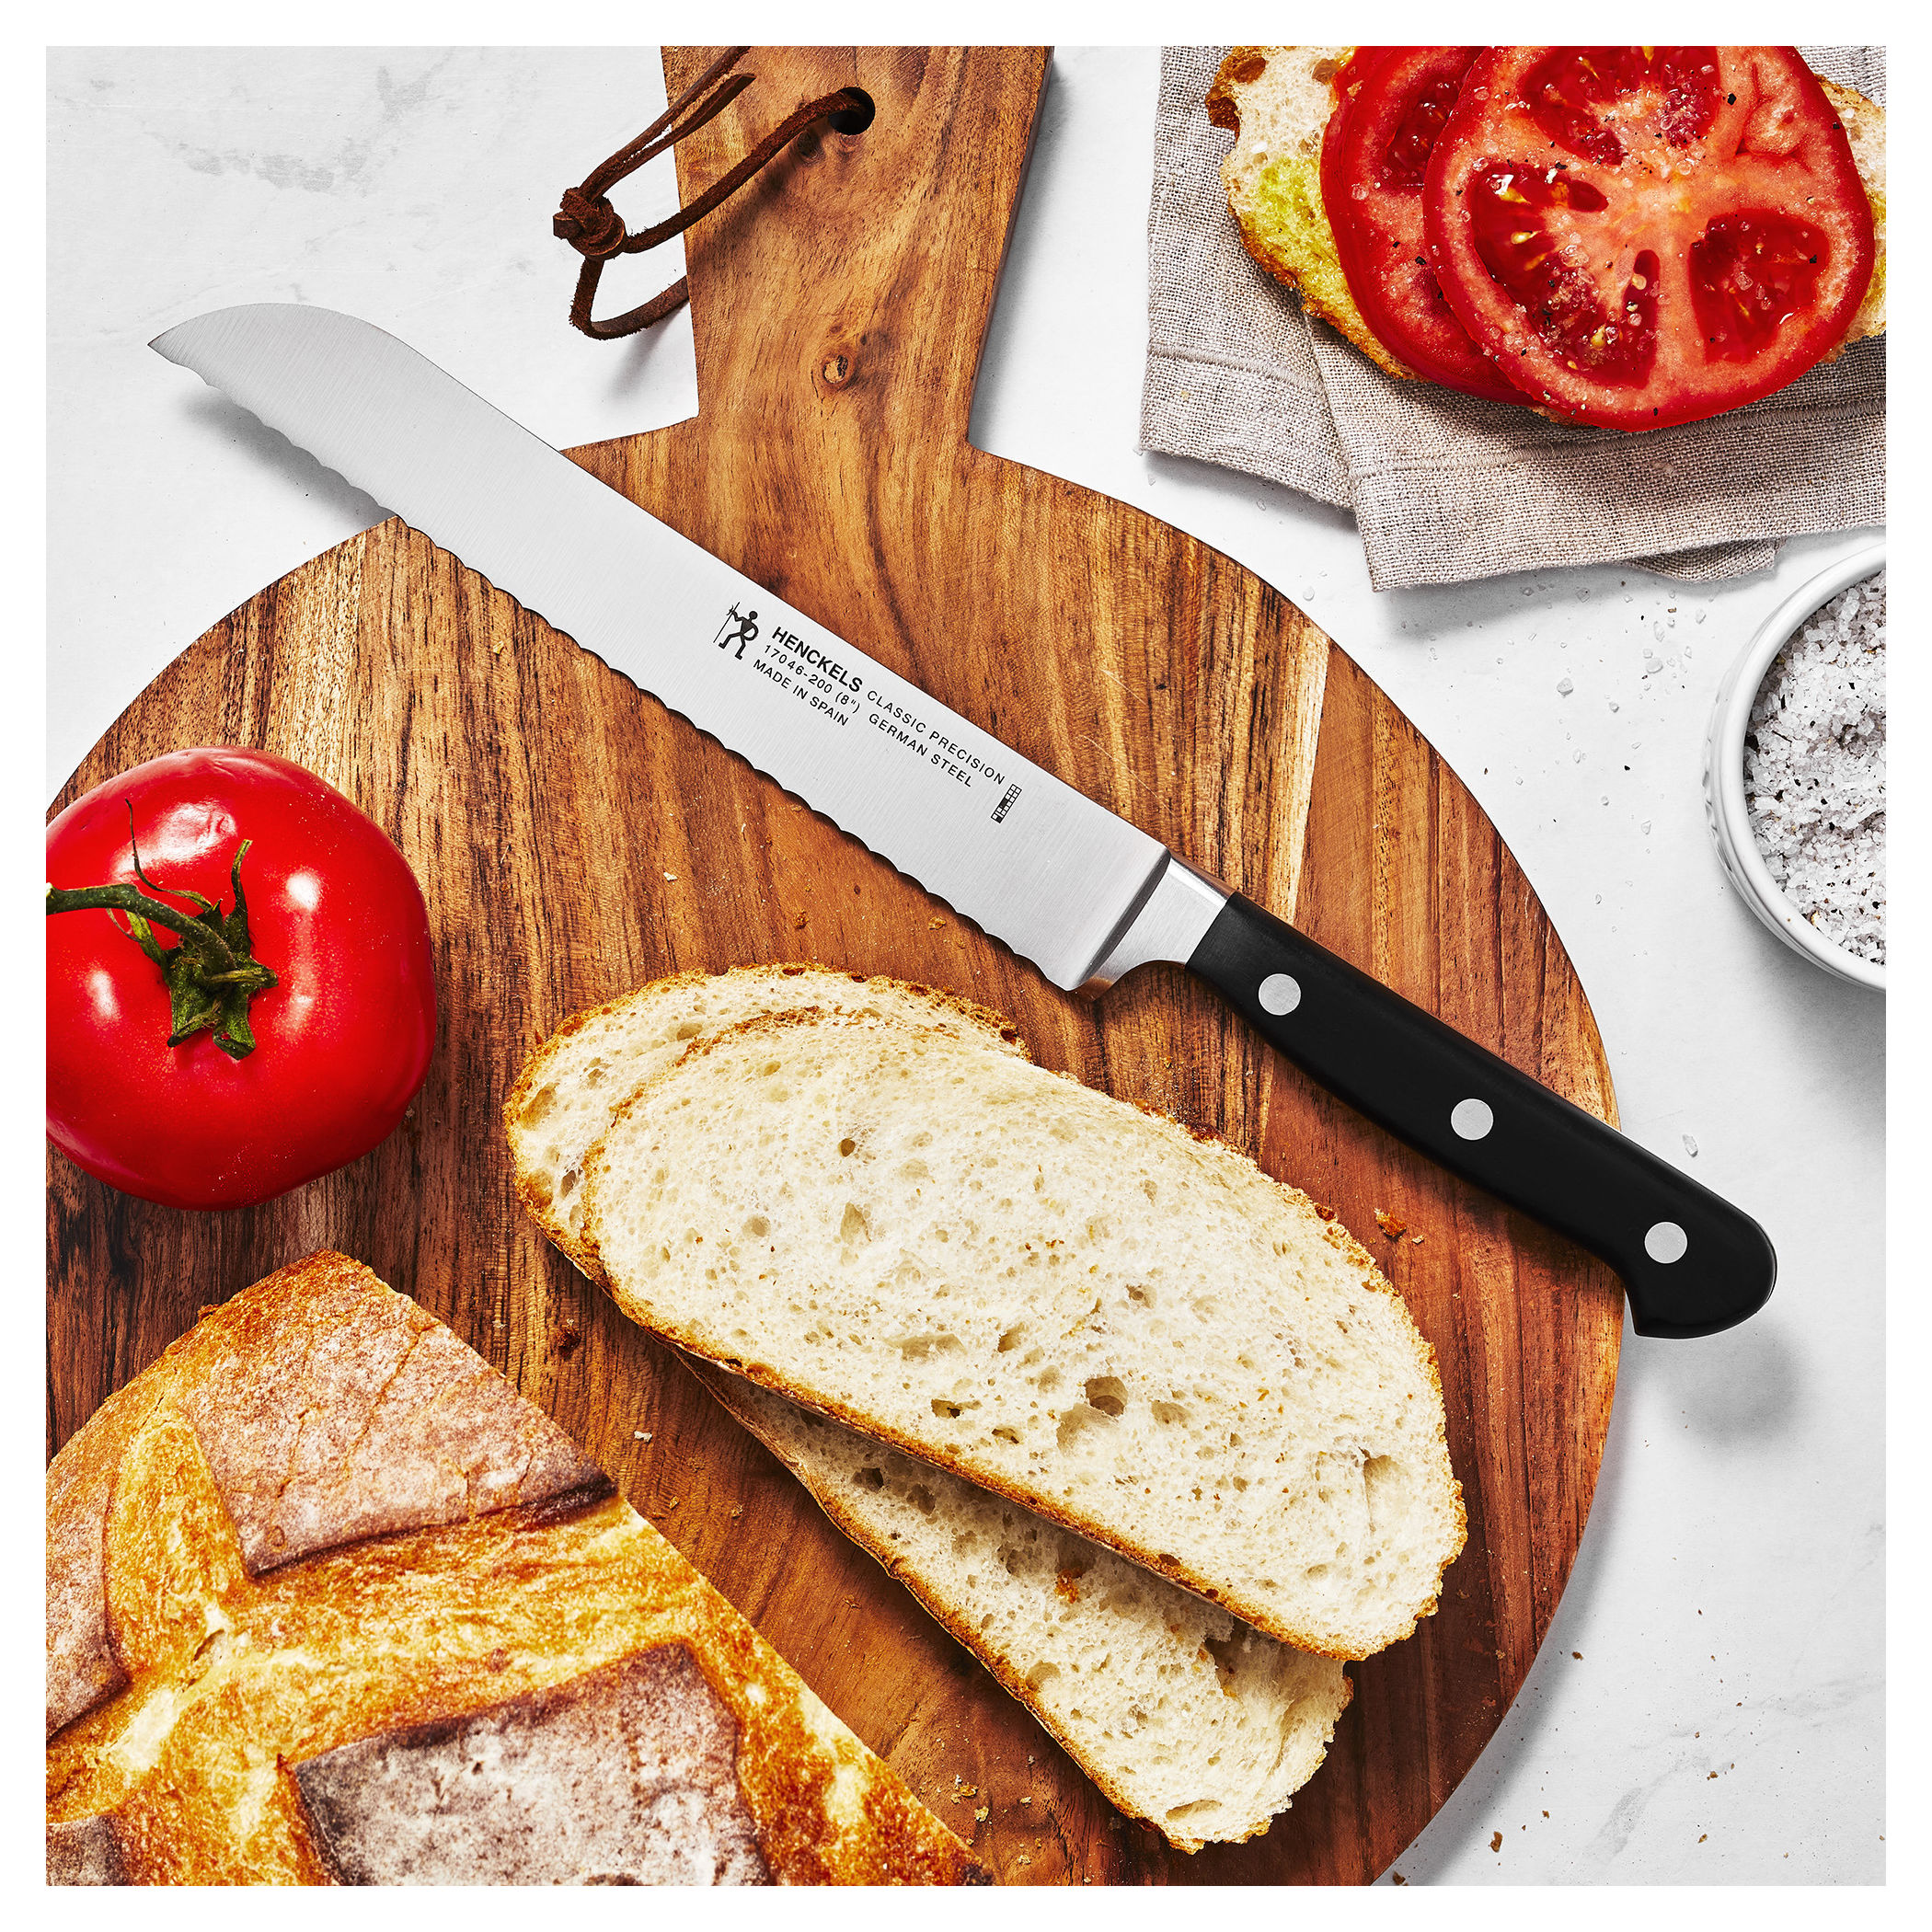 Henckels Classic Precision 8-inch, Bread knife